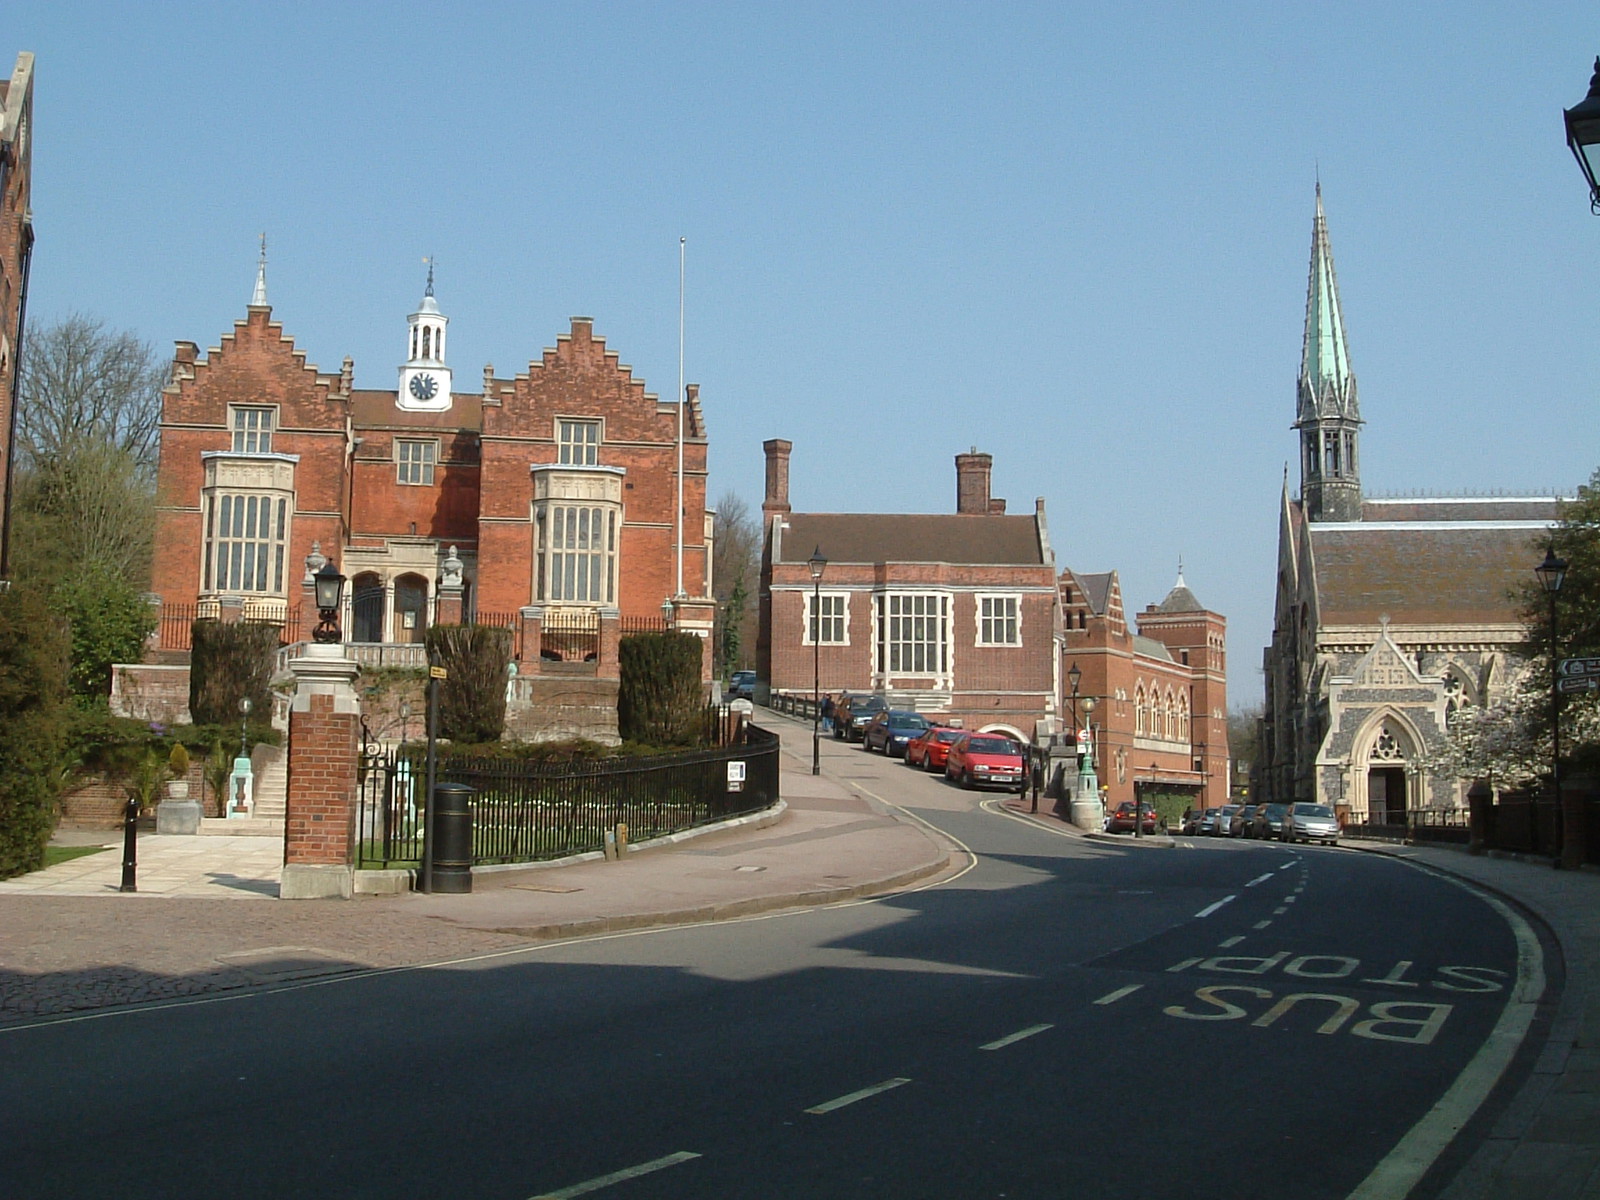 The buildings of Harrow School